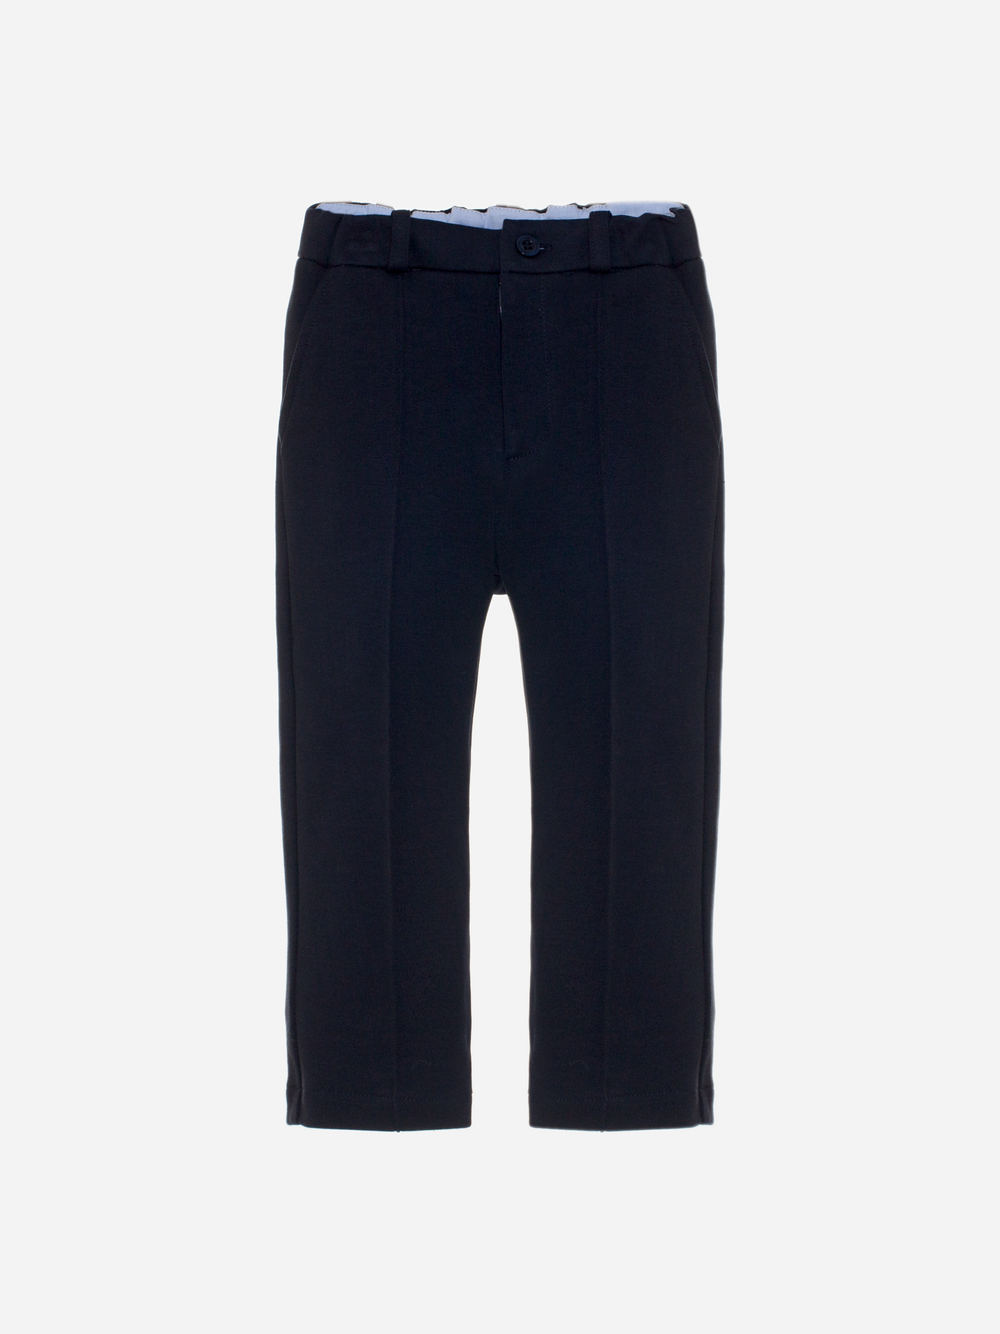 Blue oxford shorts